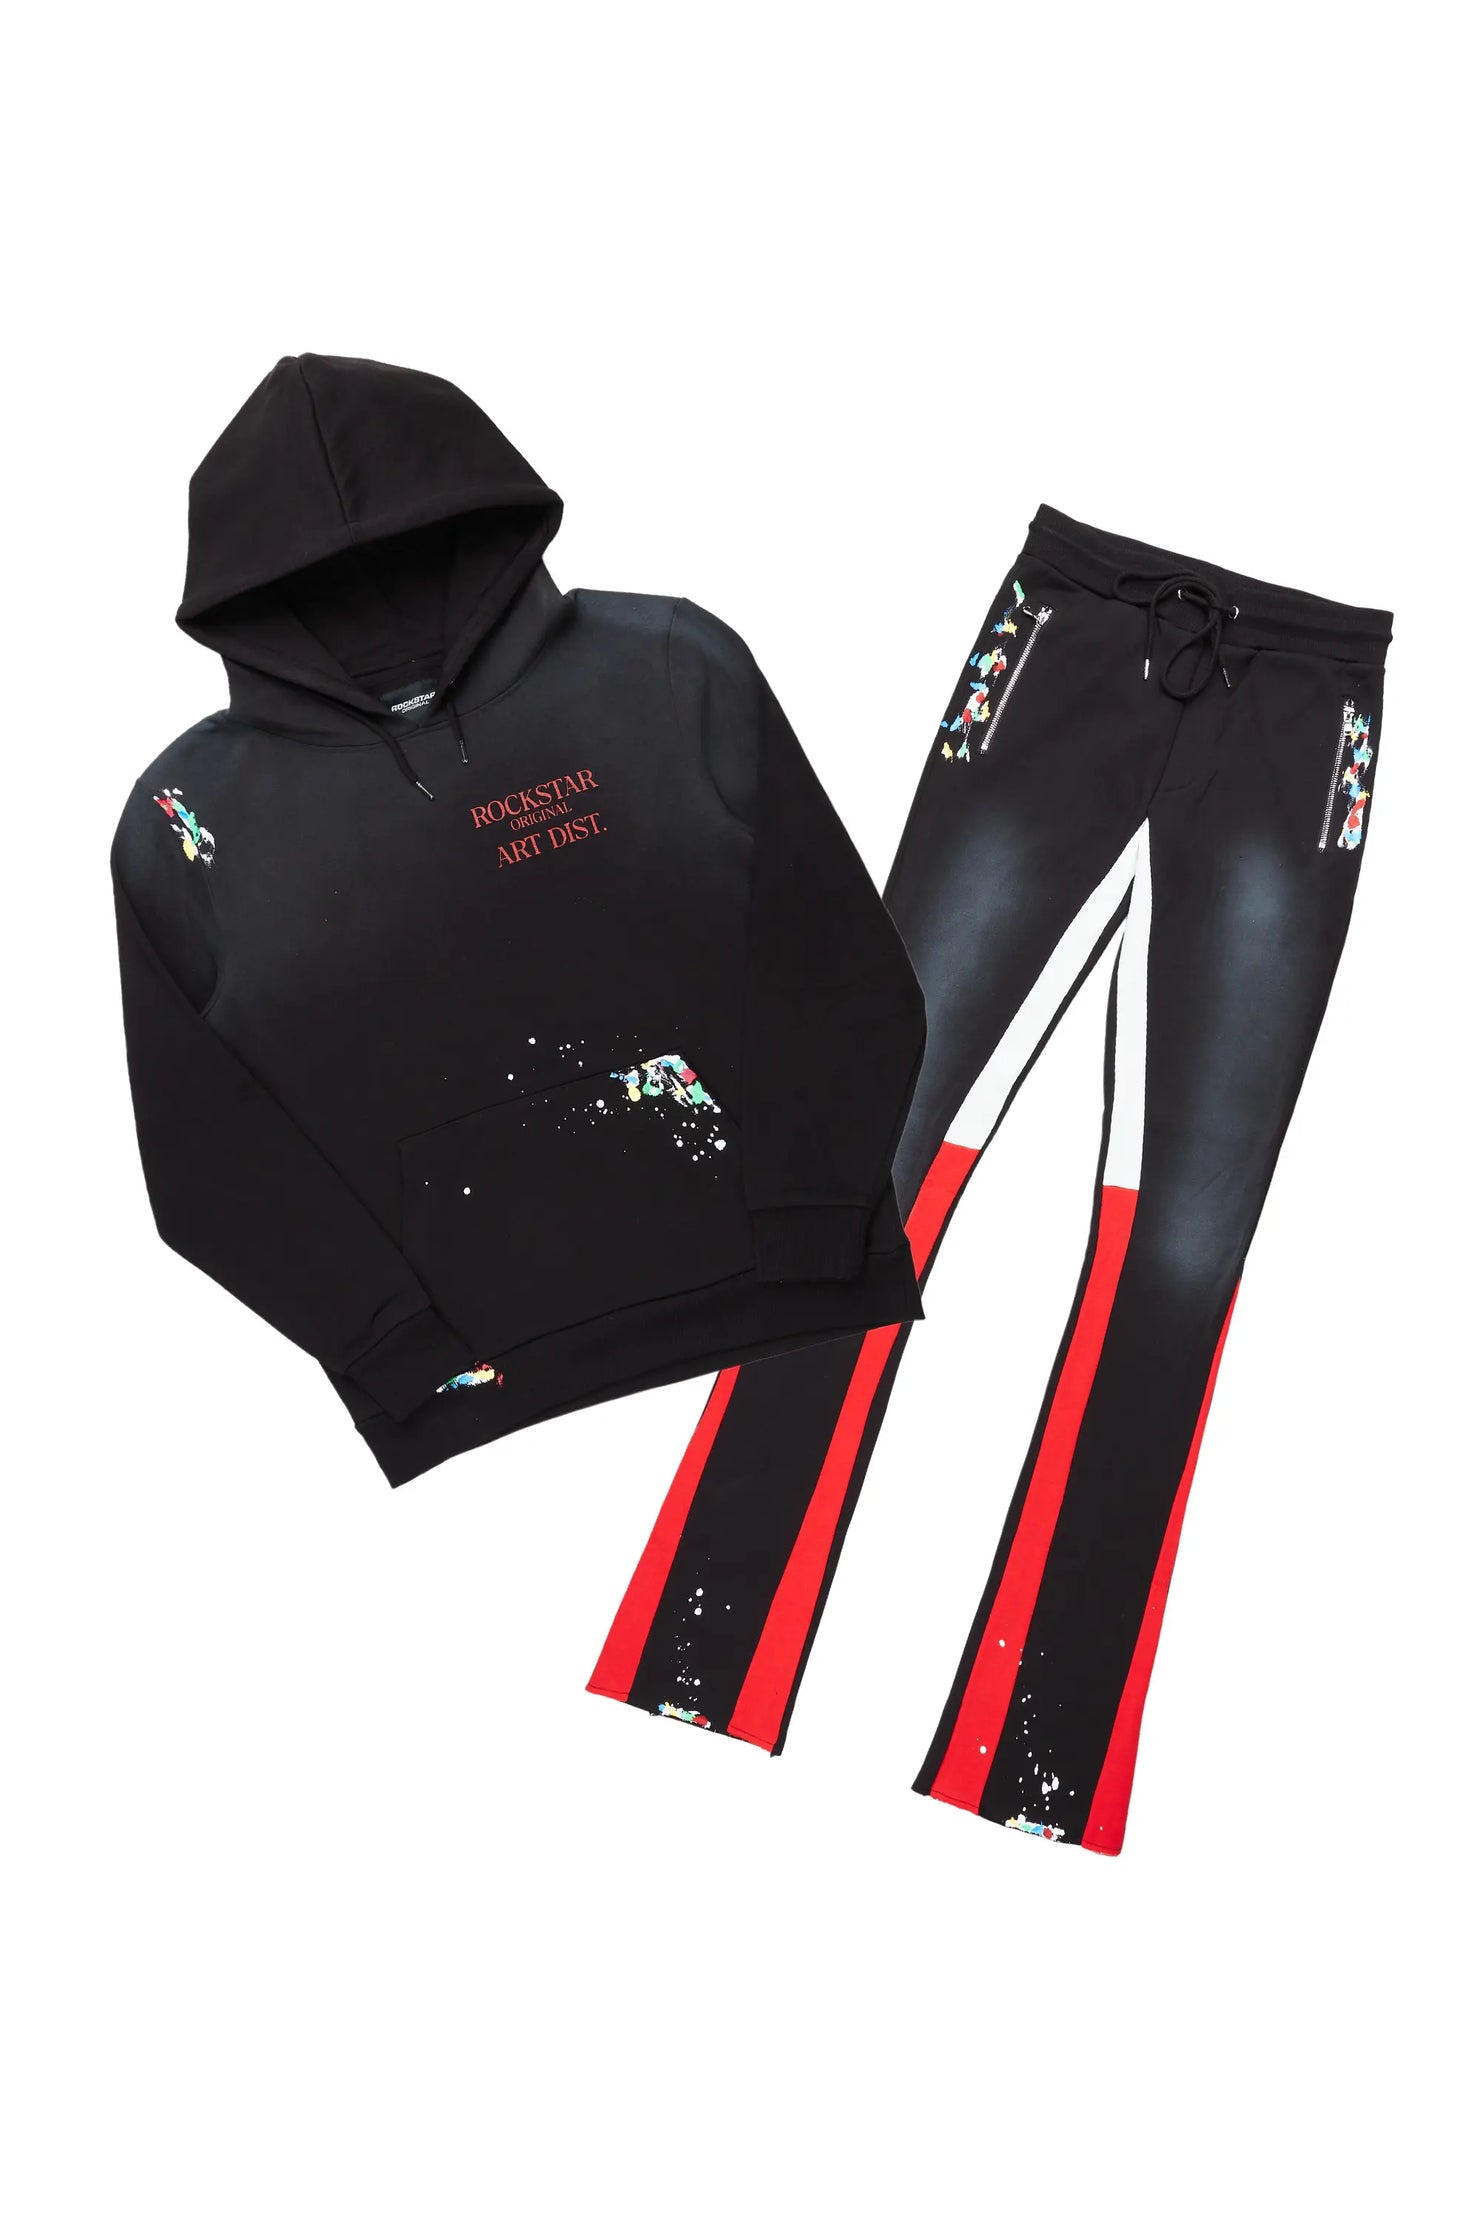 Rockstar Art Dist. Black/Red Hoodie/Stacked Flare Pant Set